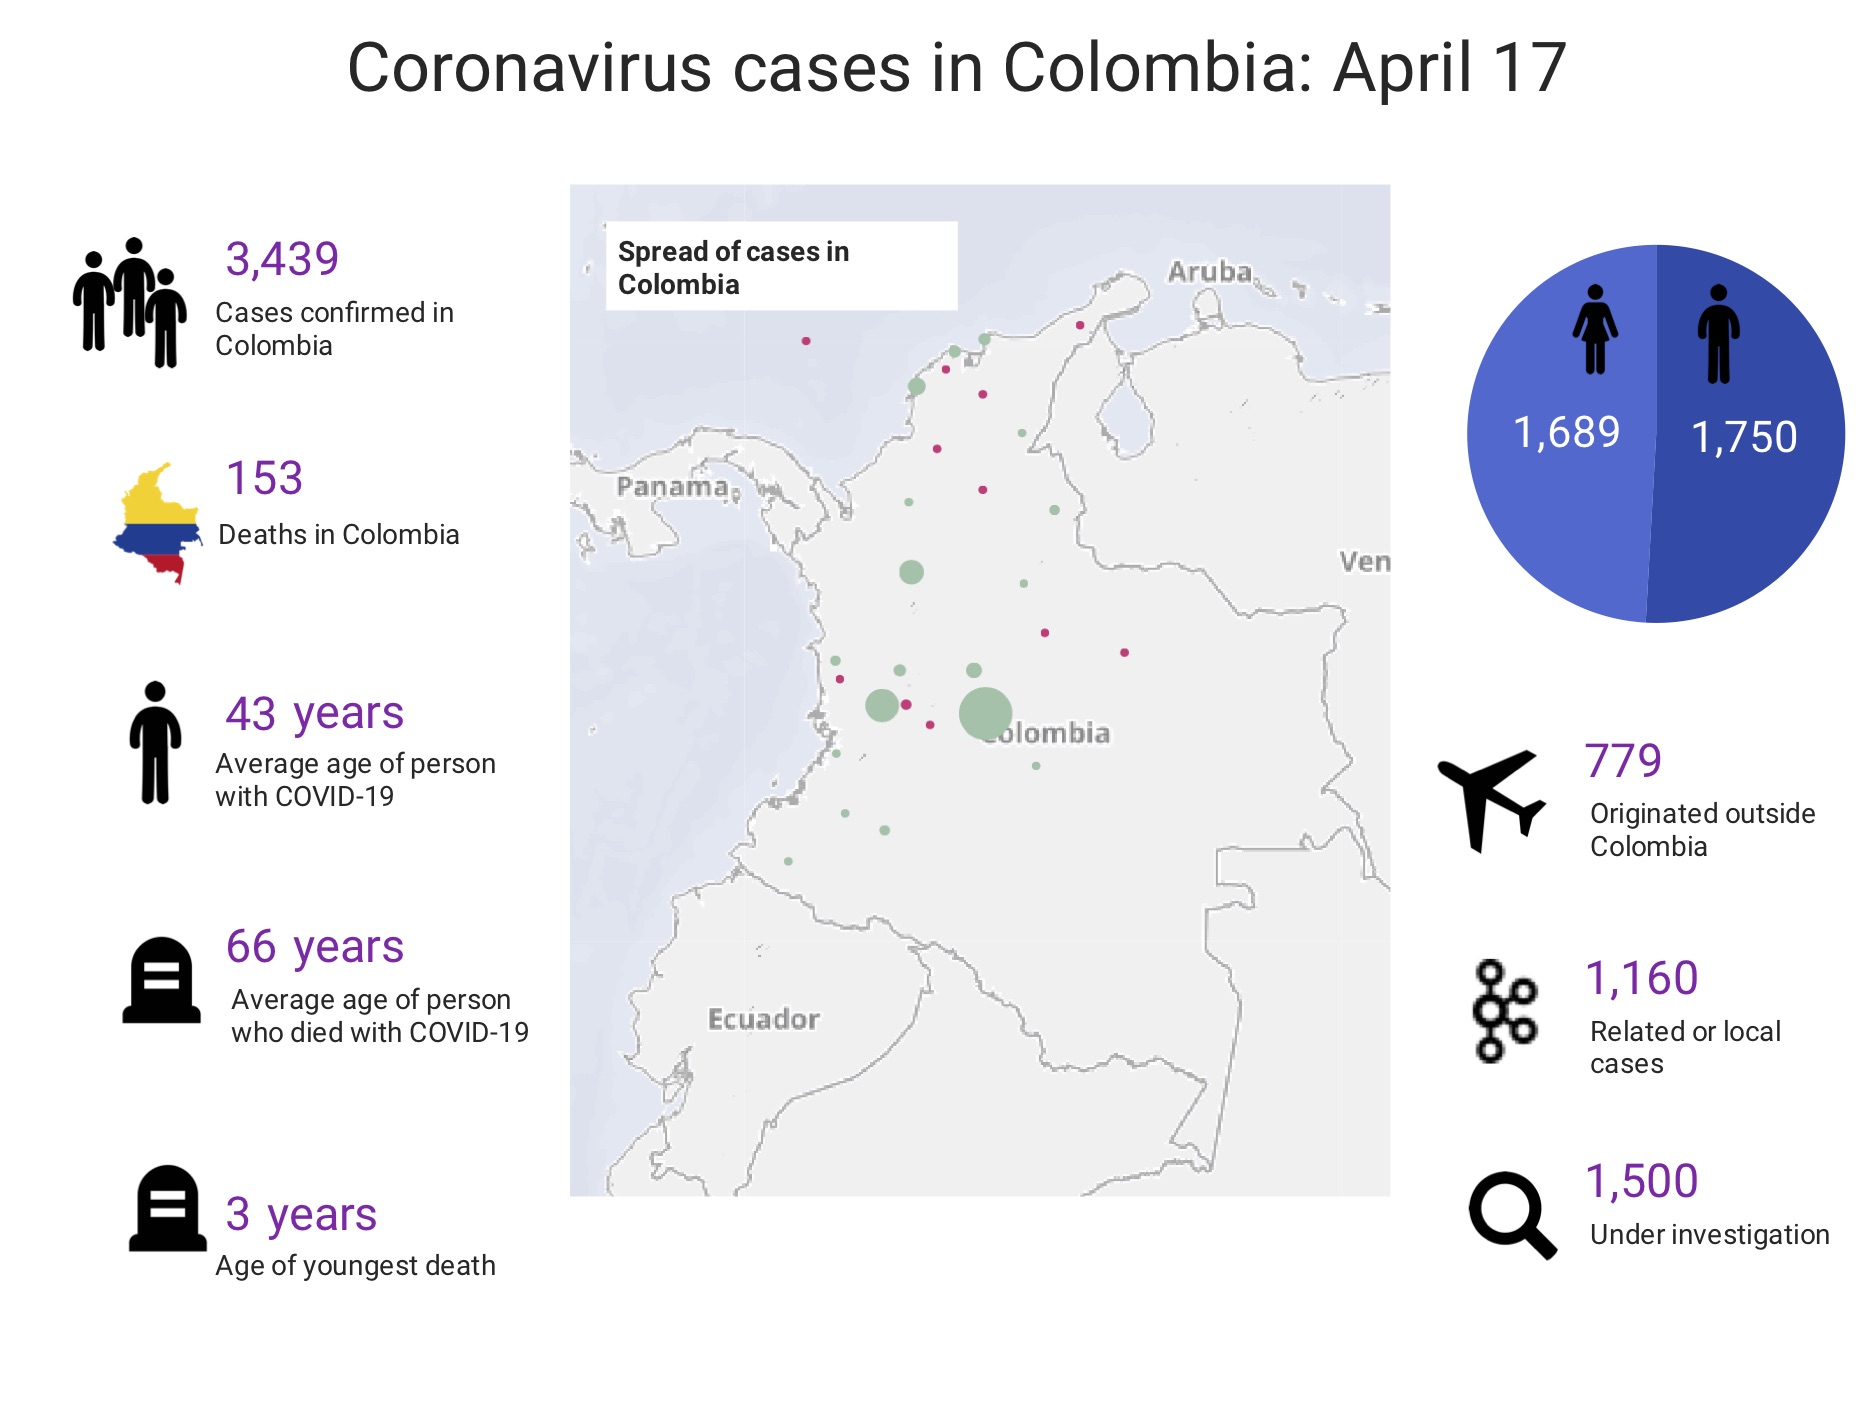 Coronavirus in Colombia: April 17 update